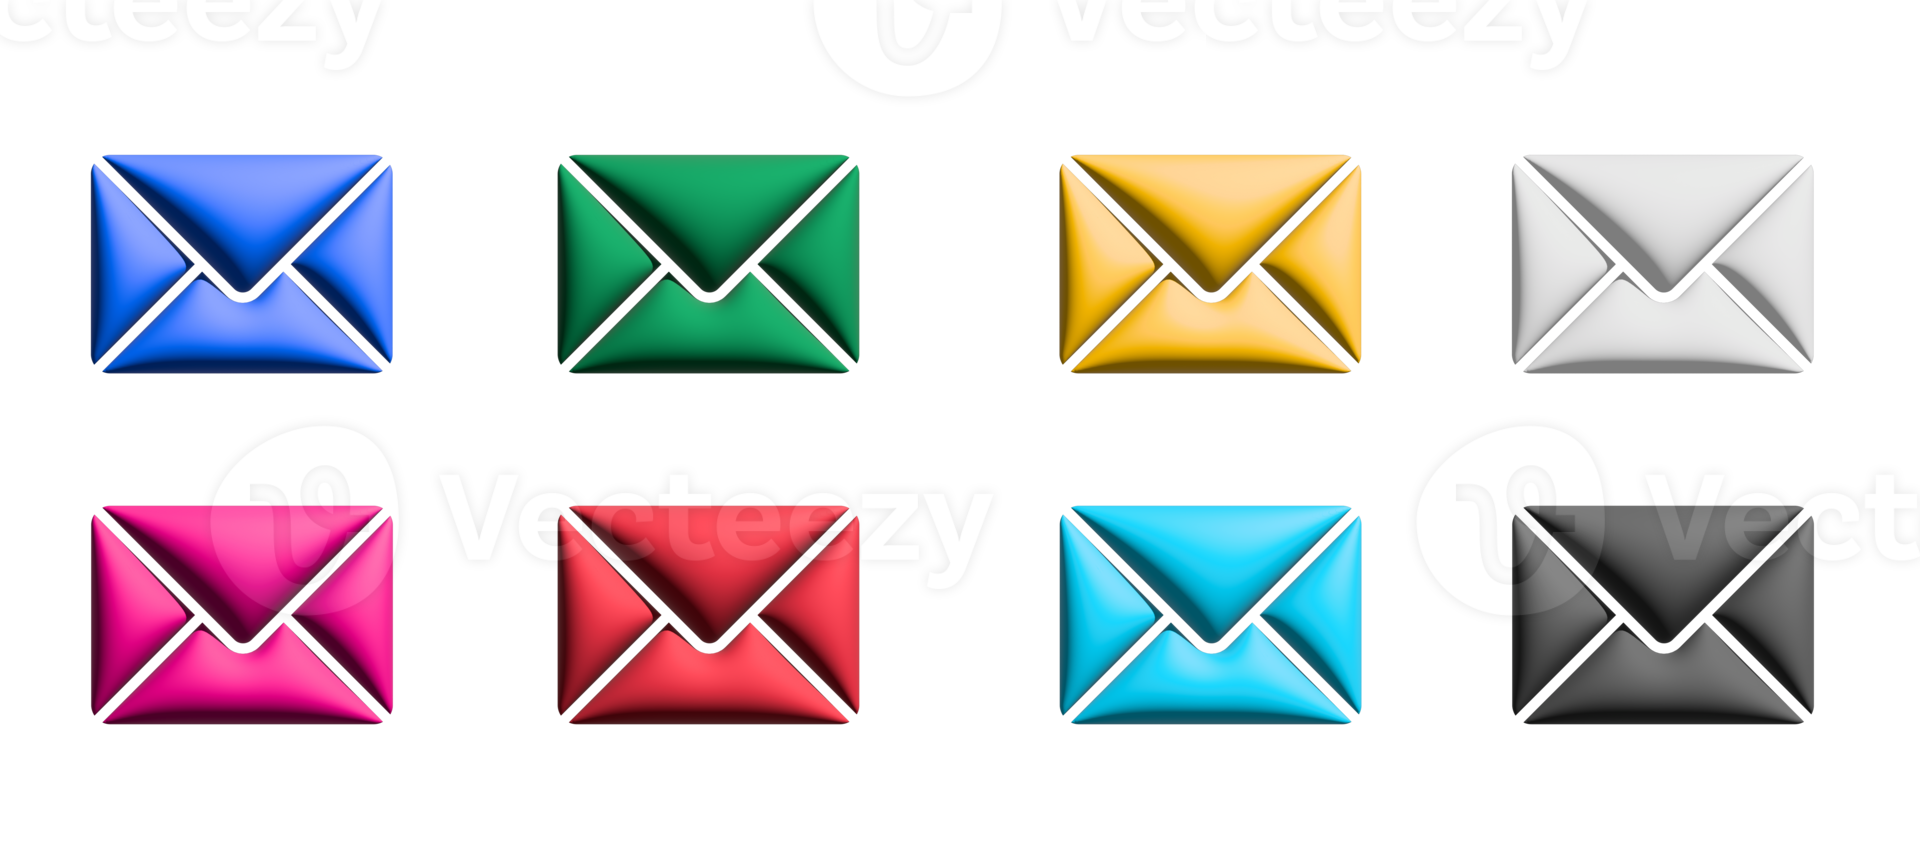 conjunto de ícones de e-mail, elementos gráficos de símbolos coloridos png